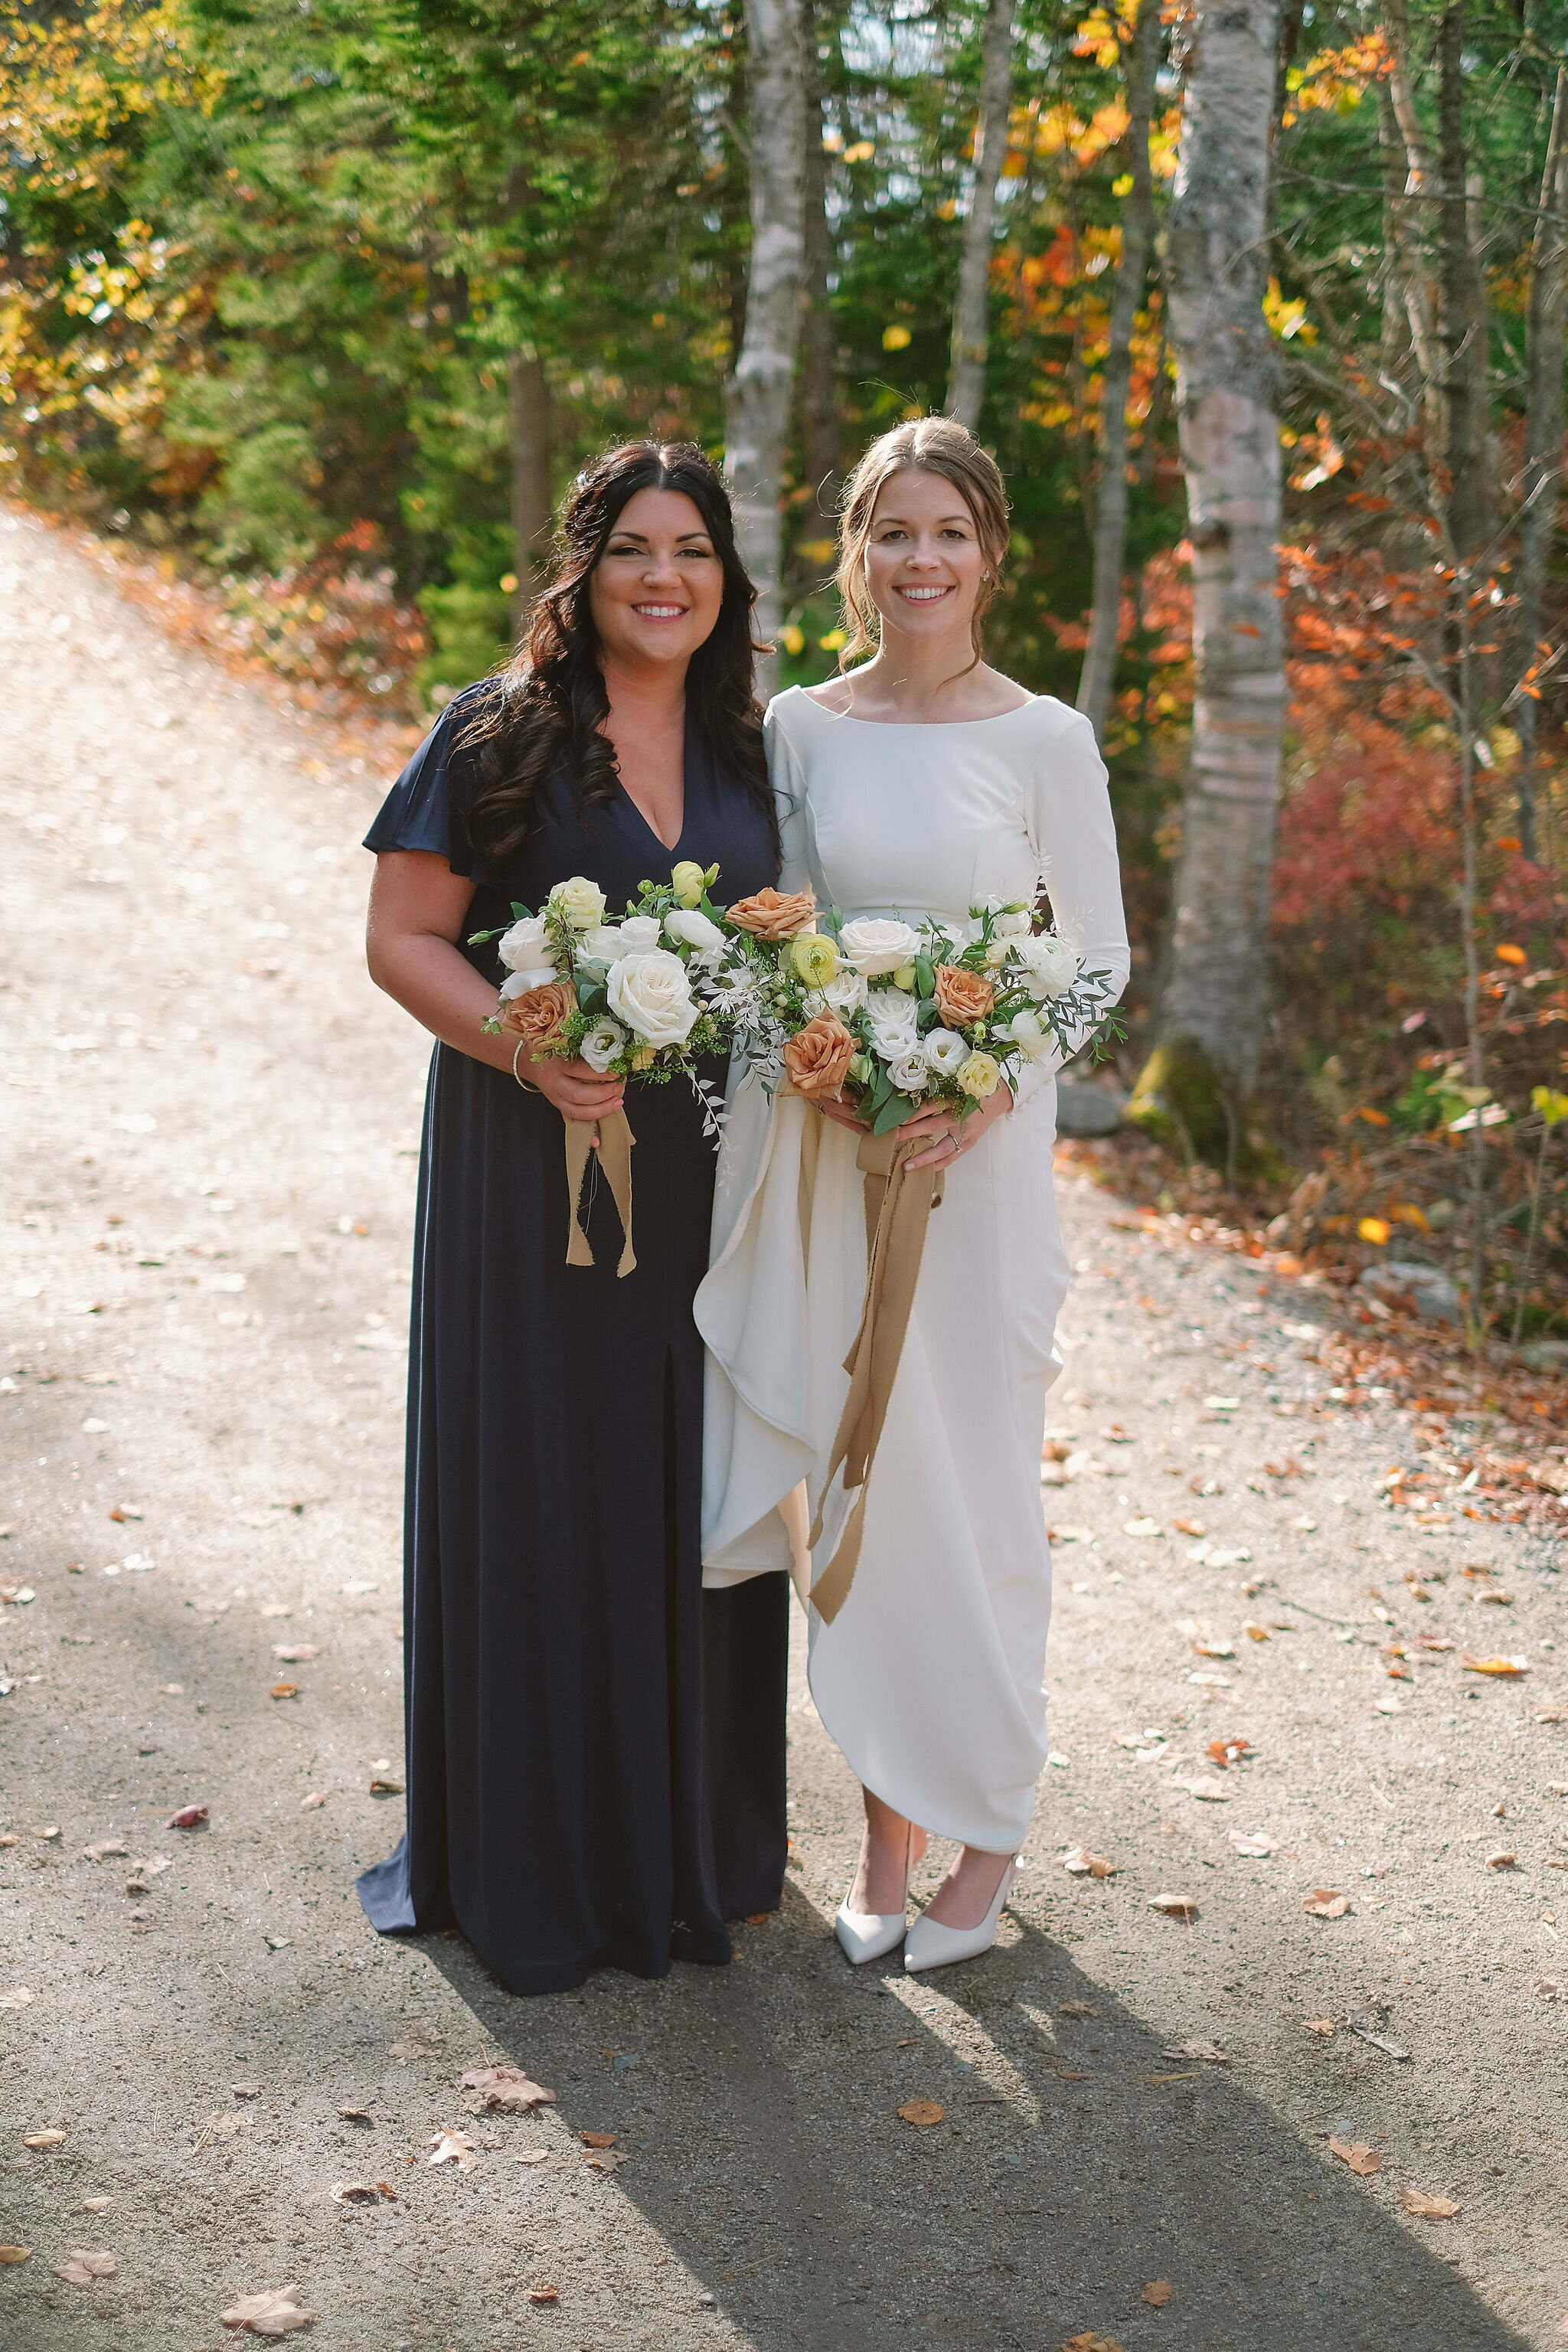 Twig_and_twine_floristry_Halifax_Nova_Scotia_Wedding_Florist_Halifax_Wedding_Flowers5.jpg